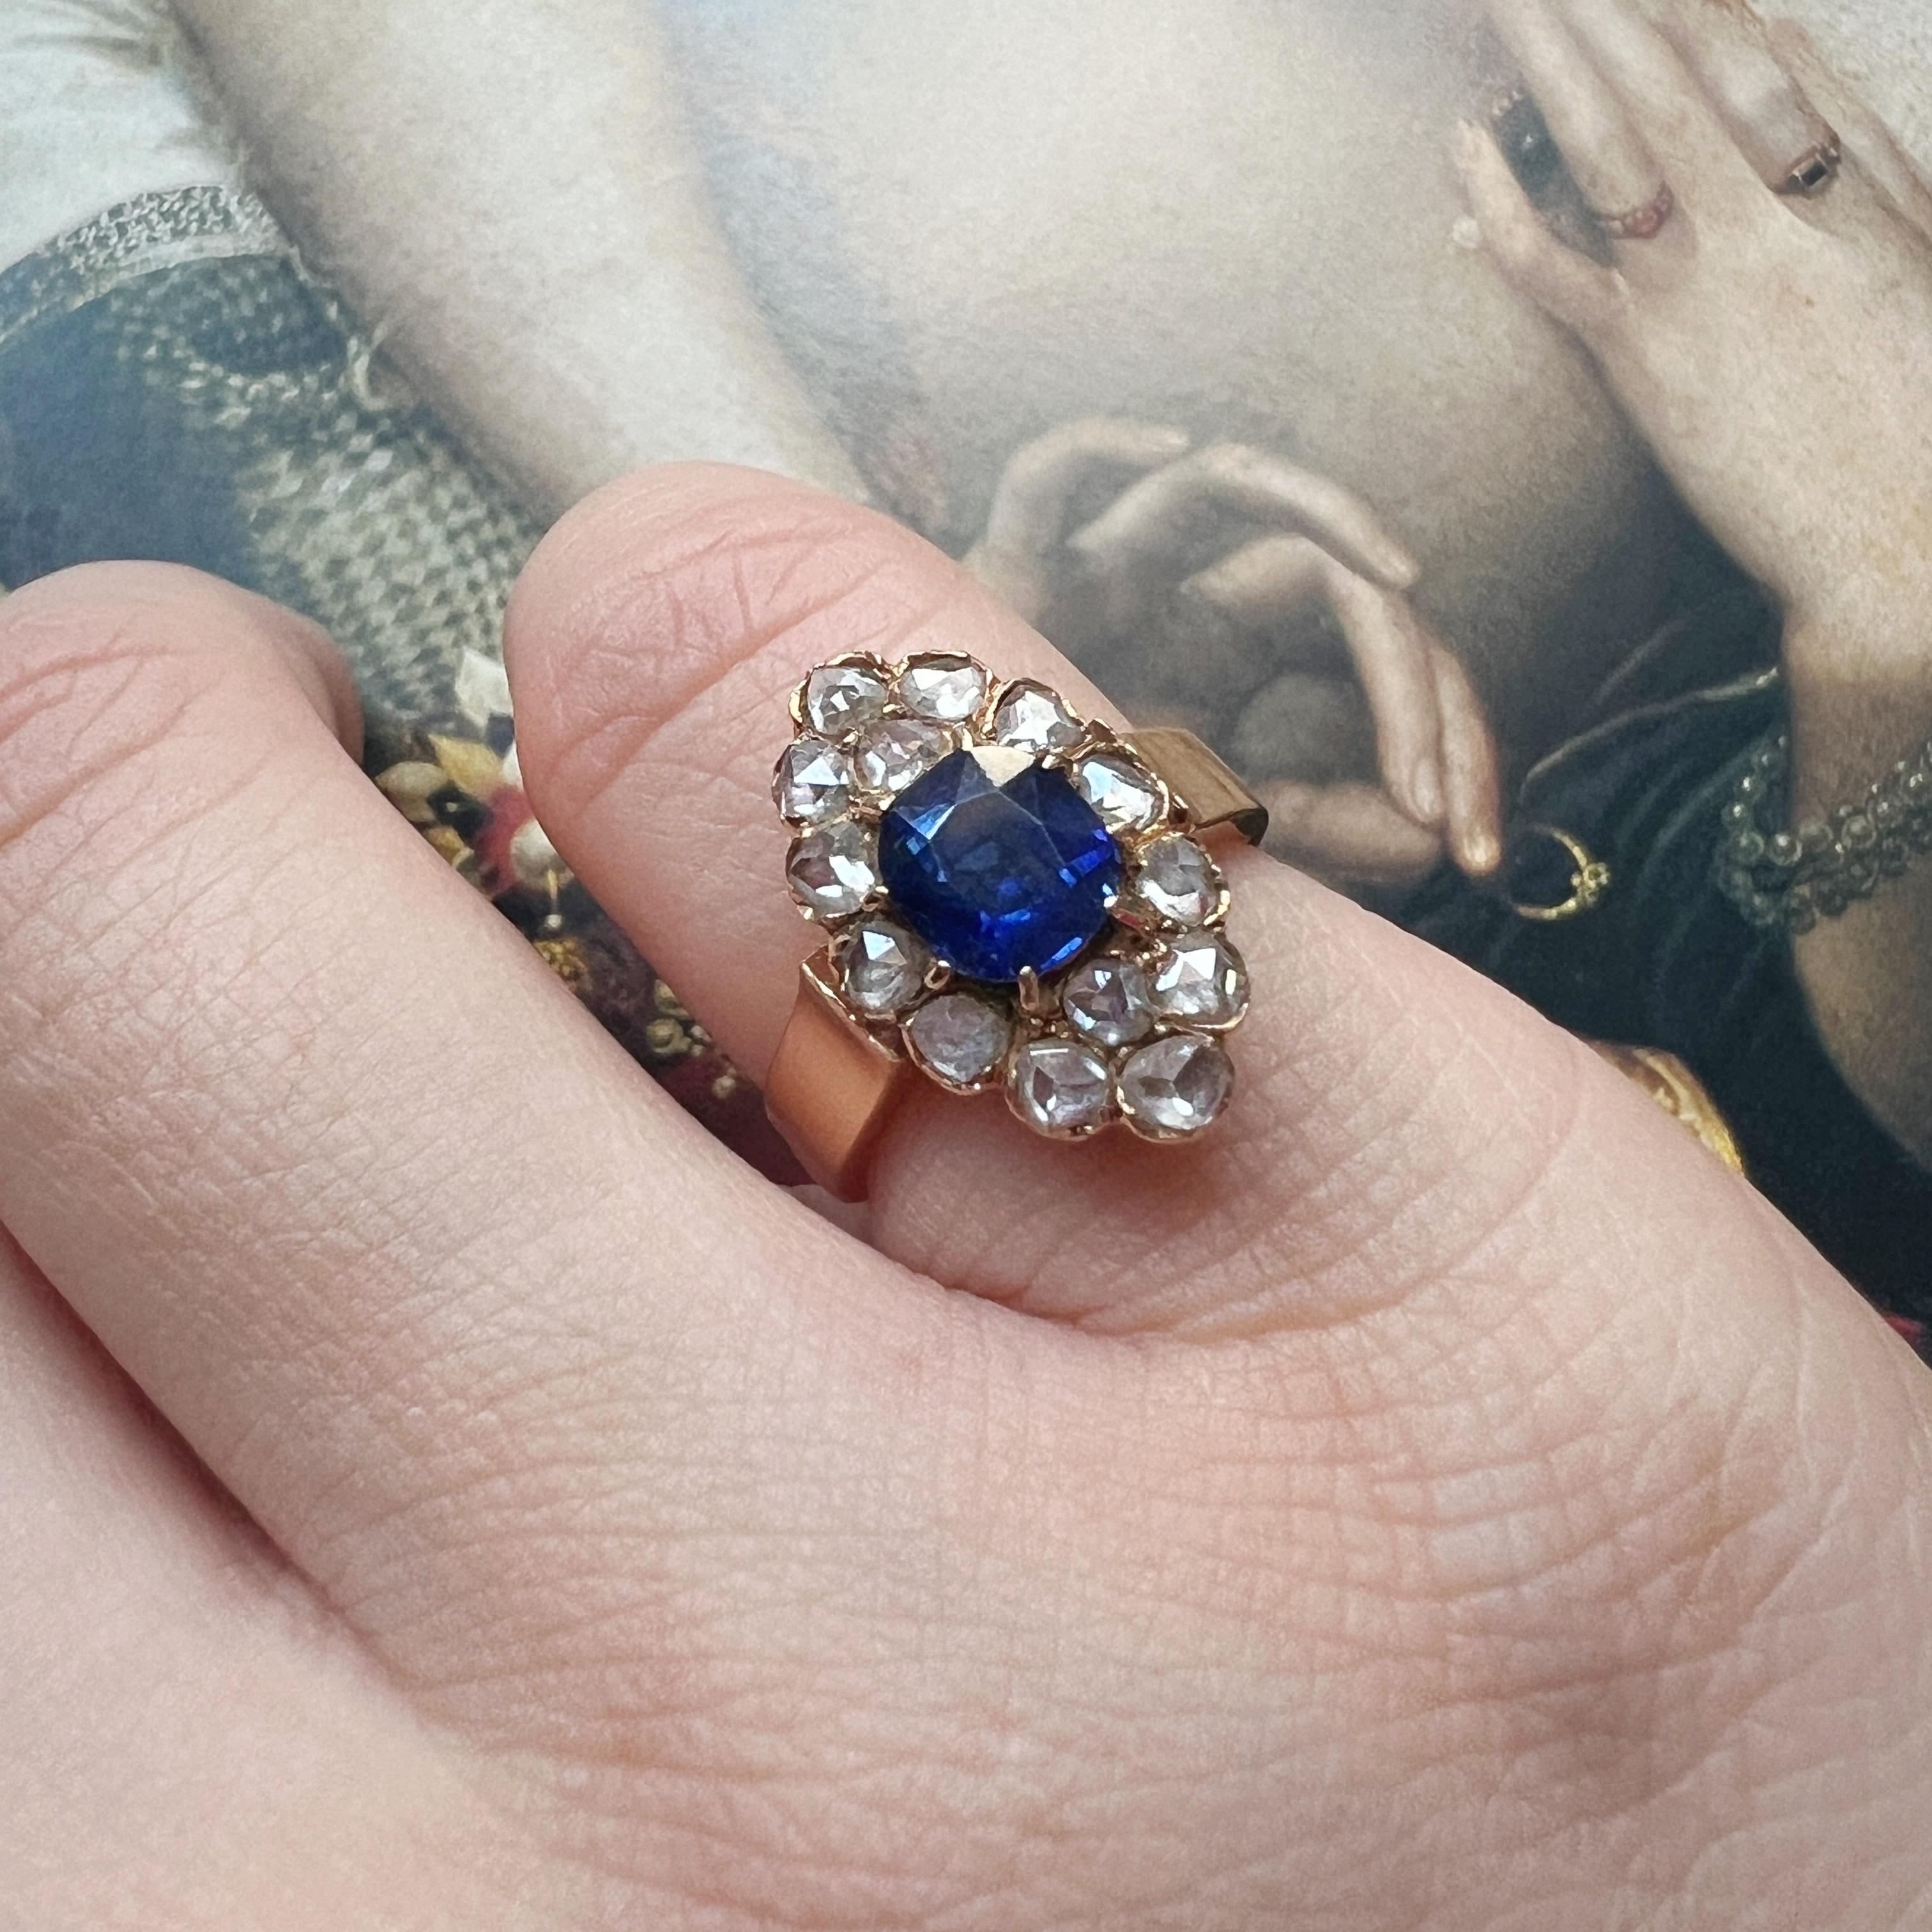 Antique Cushion Cut Antique LFG certified natural unheated blue sapphire diamond marquise ring